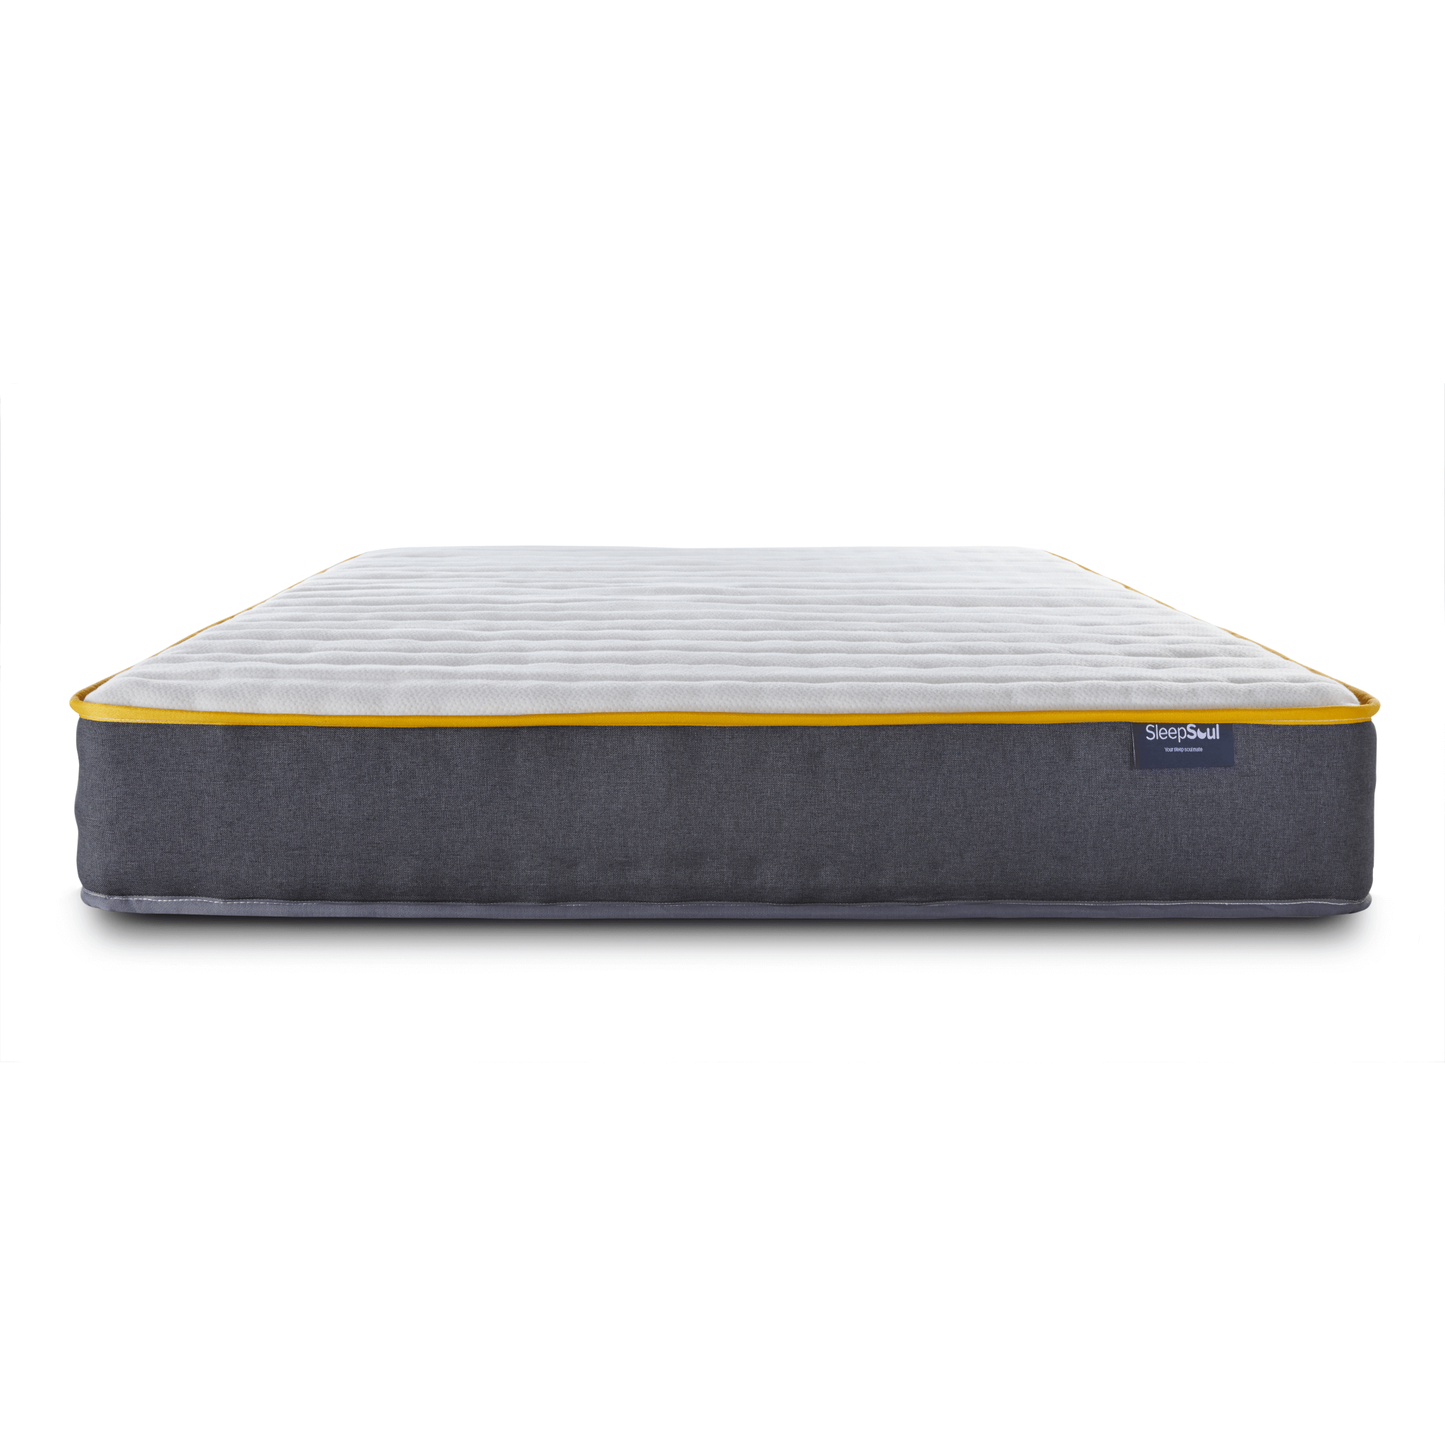 SleepSoul comfort 800 pocket spring standard single mattress full 2